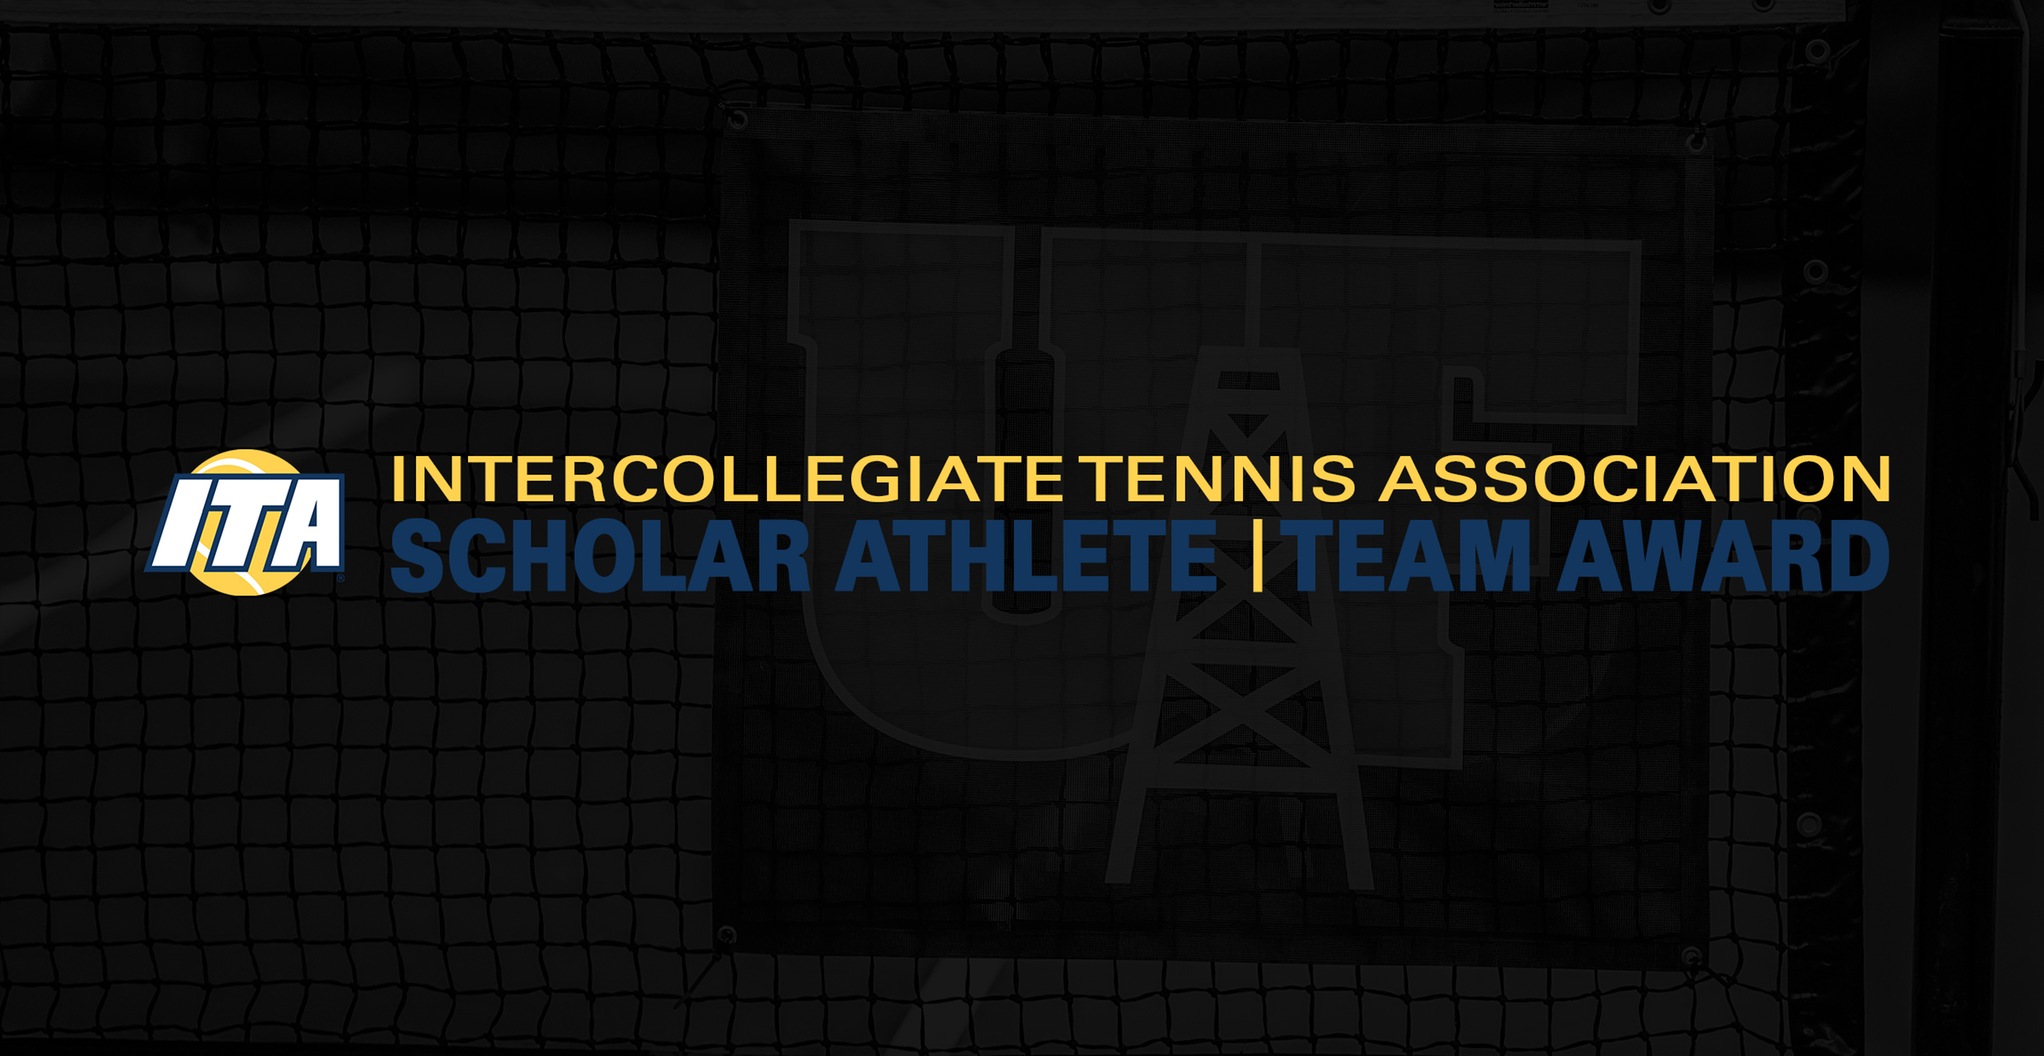 Tennis academic award from Intercollegiate Tennis Association on black background